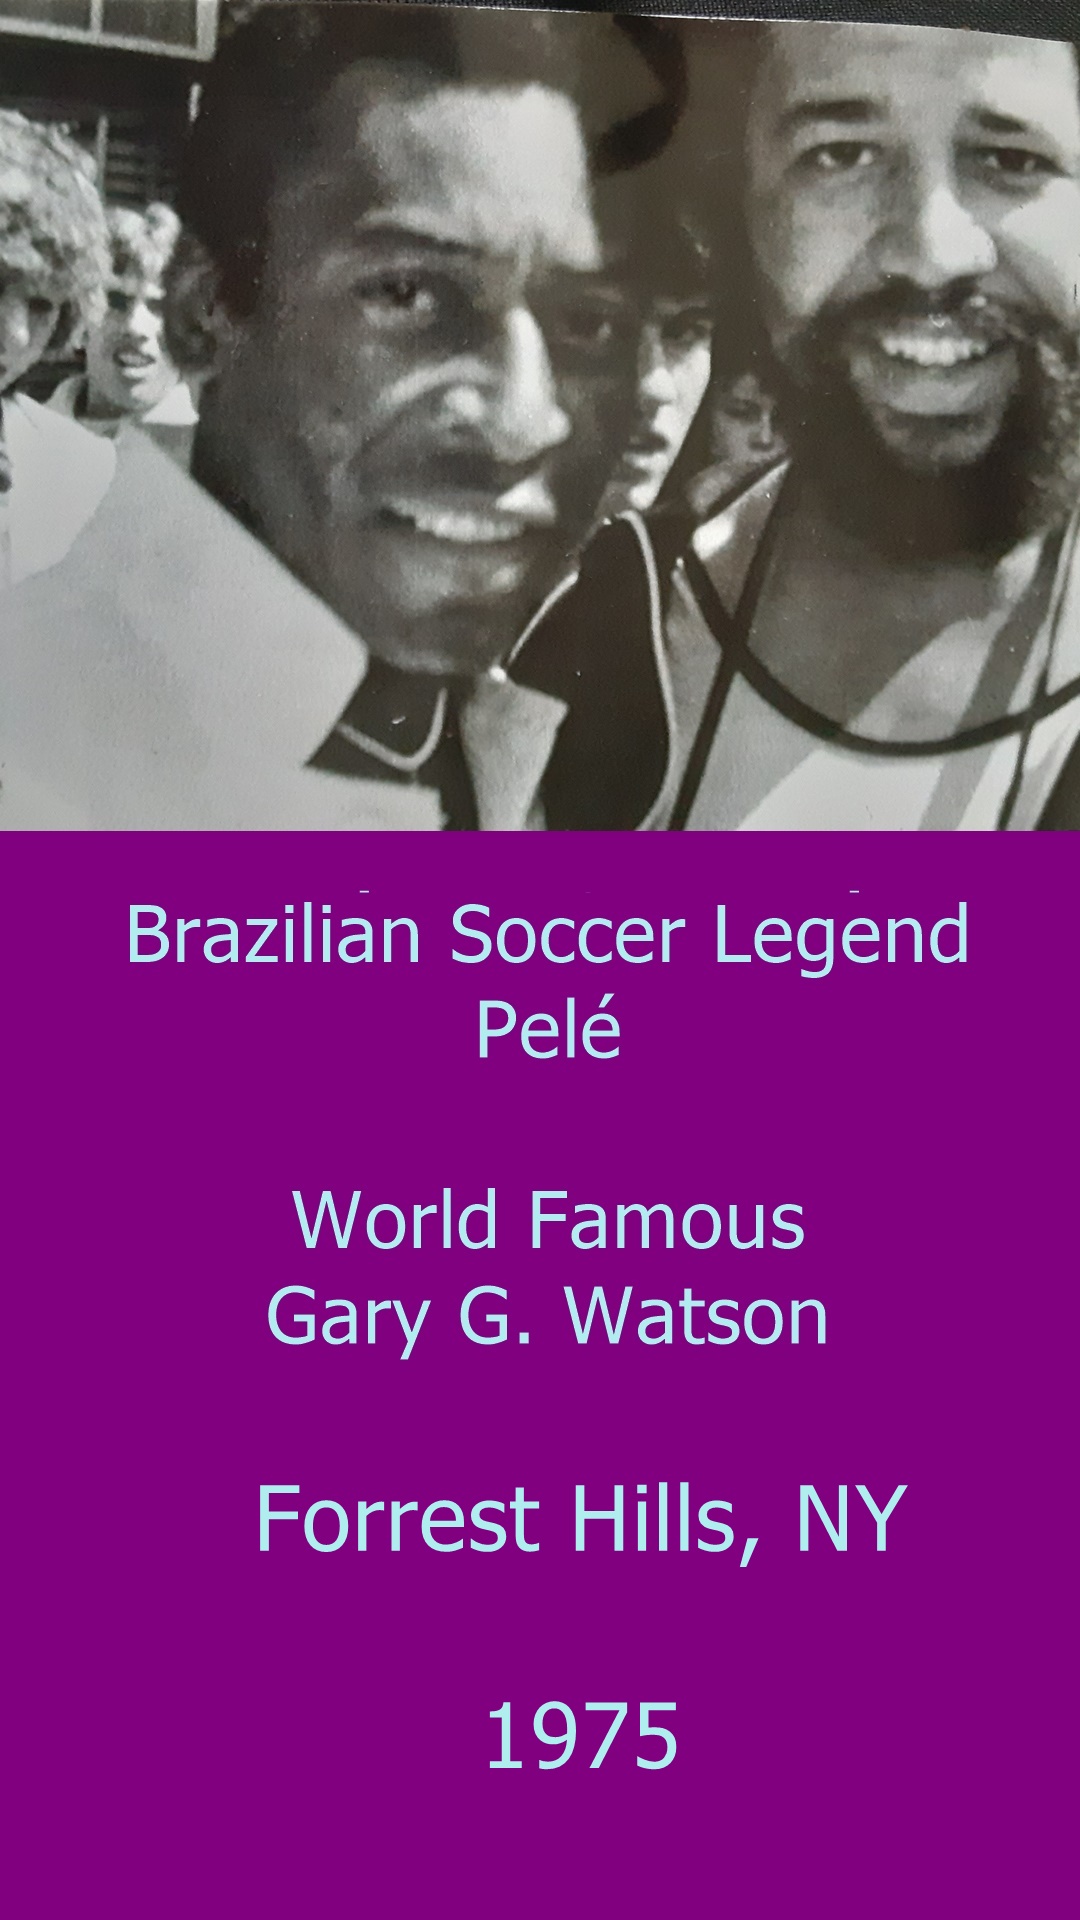 Pelé and Gary W